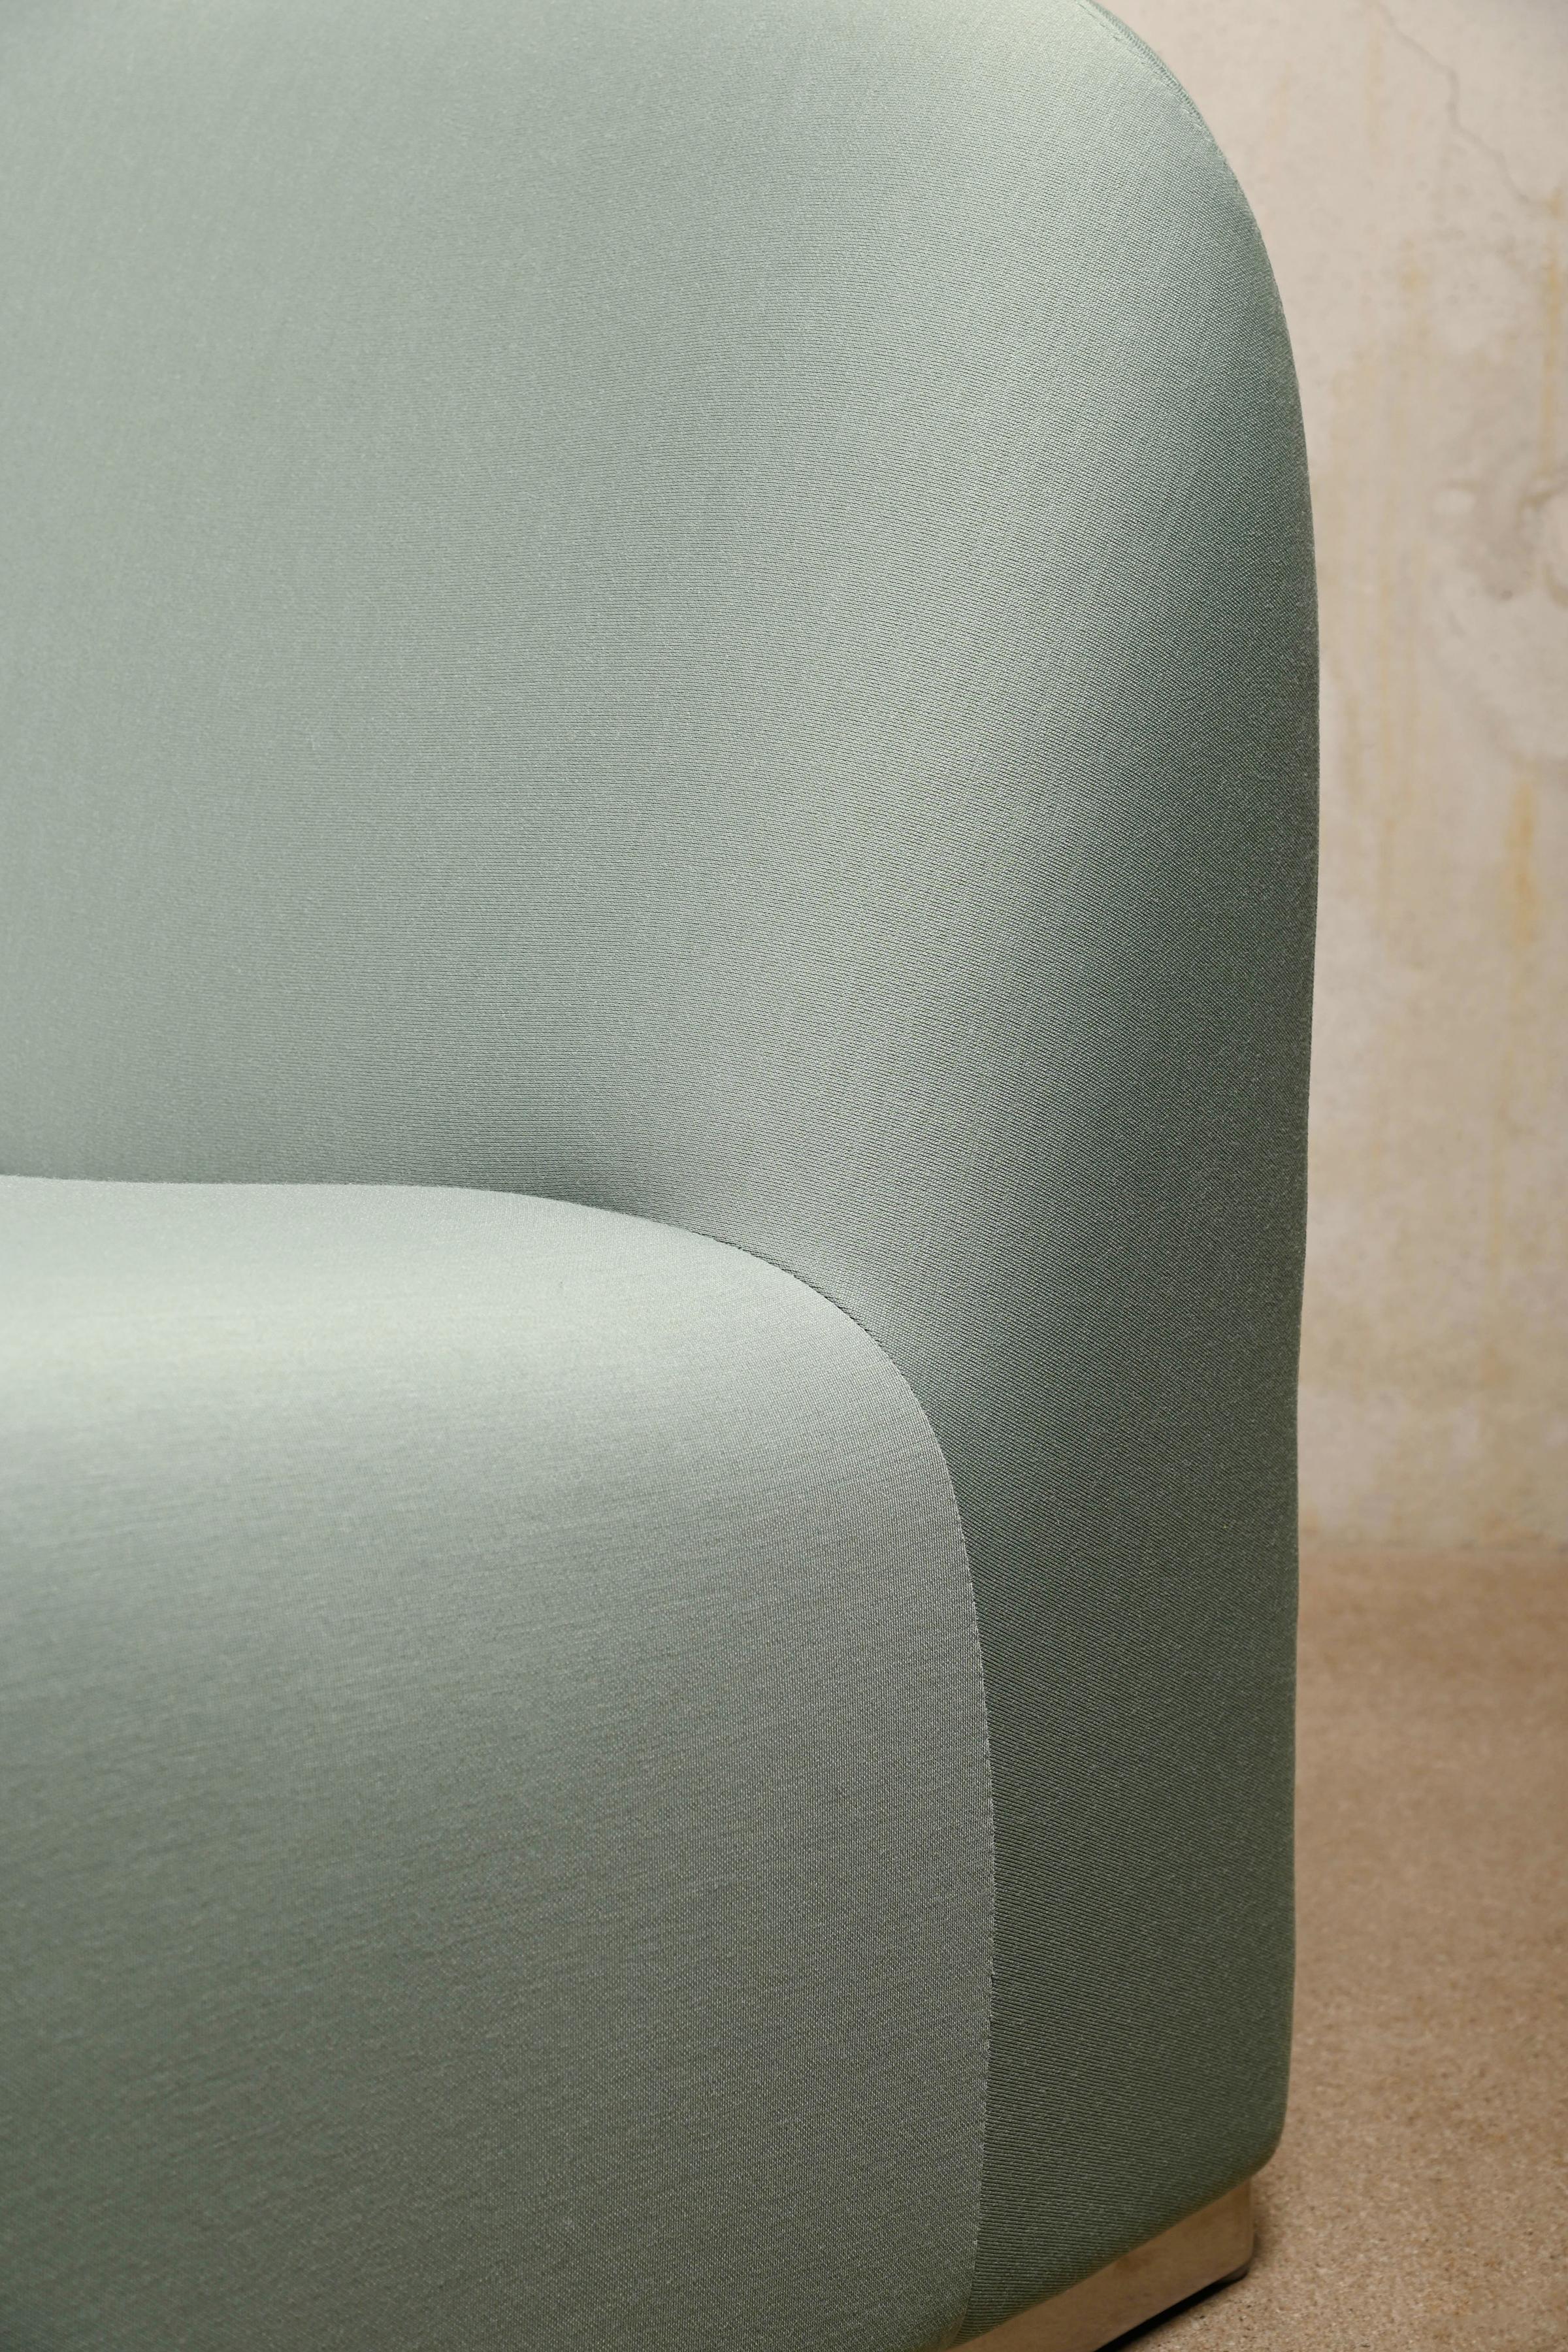 Giancarlo Piretti Alky Lounge Chair in Green Kvadrat Fabric, Artifort 3